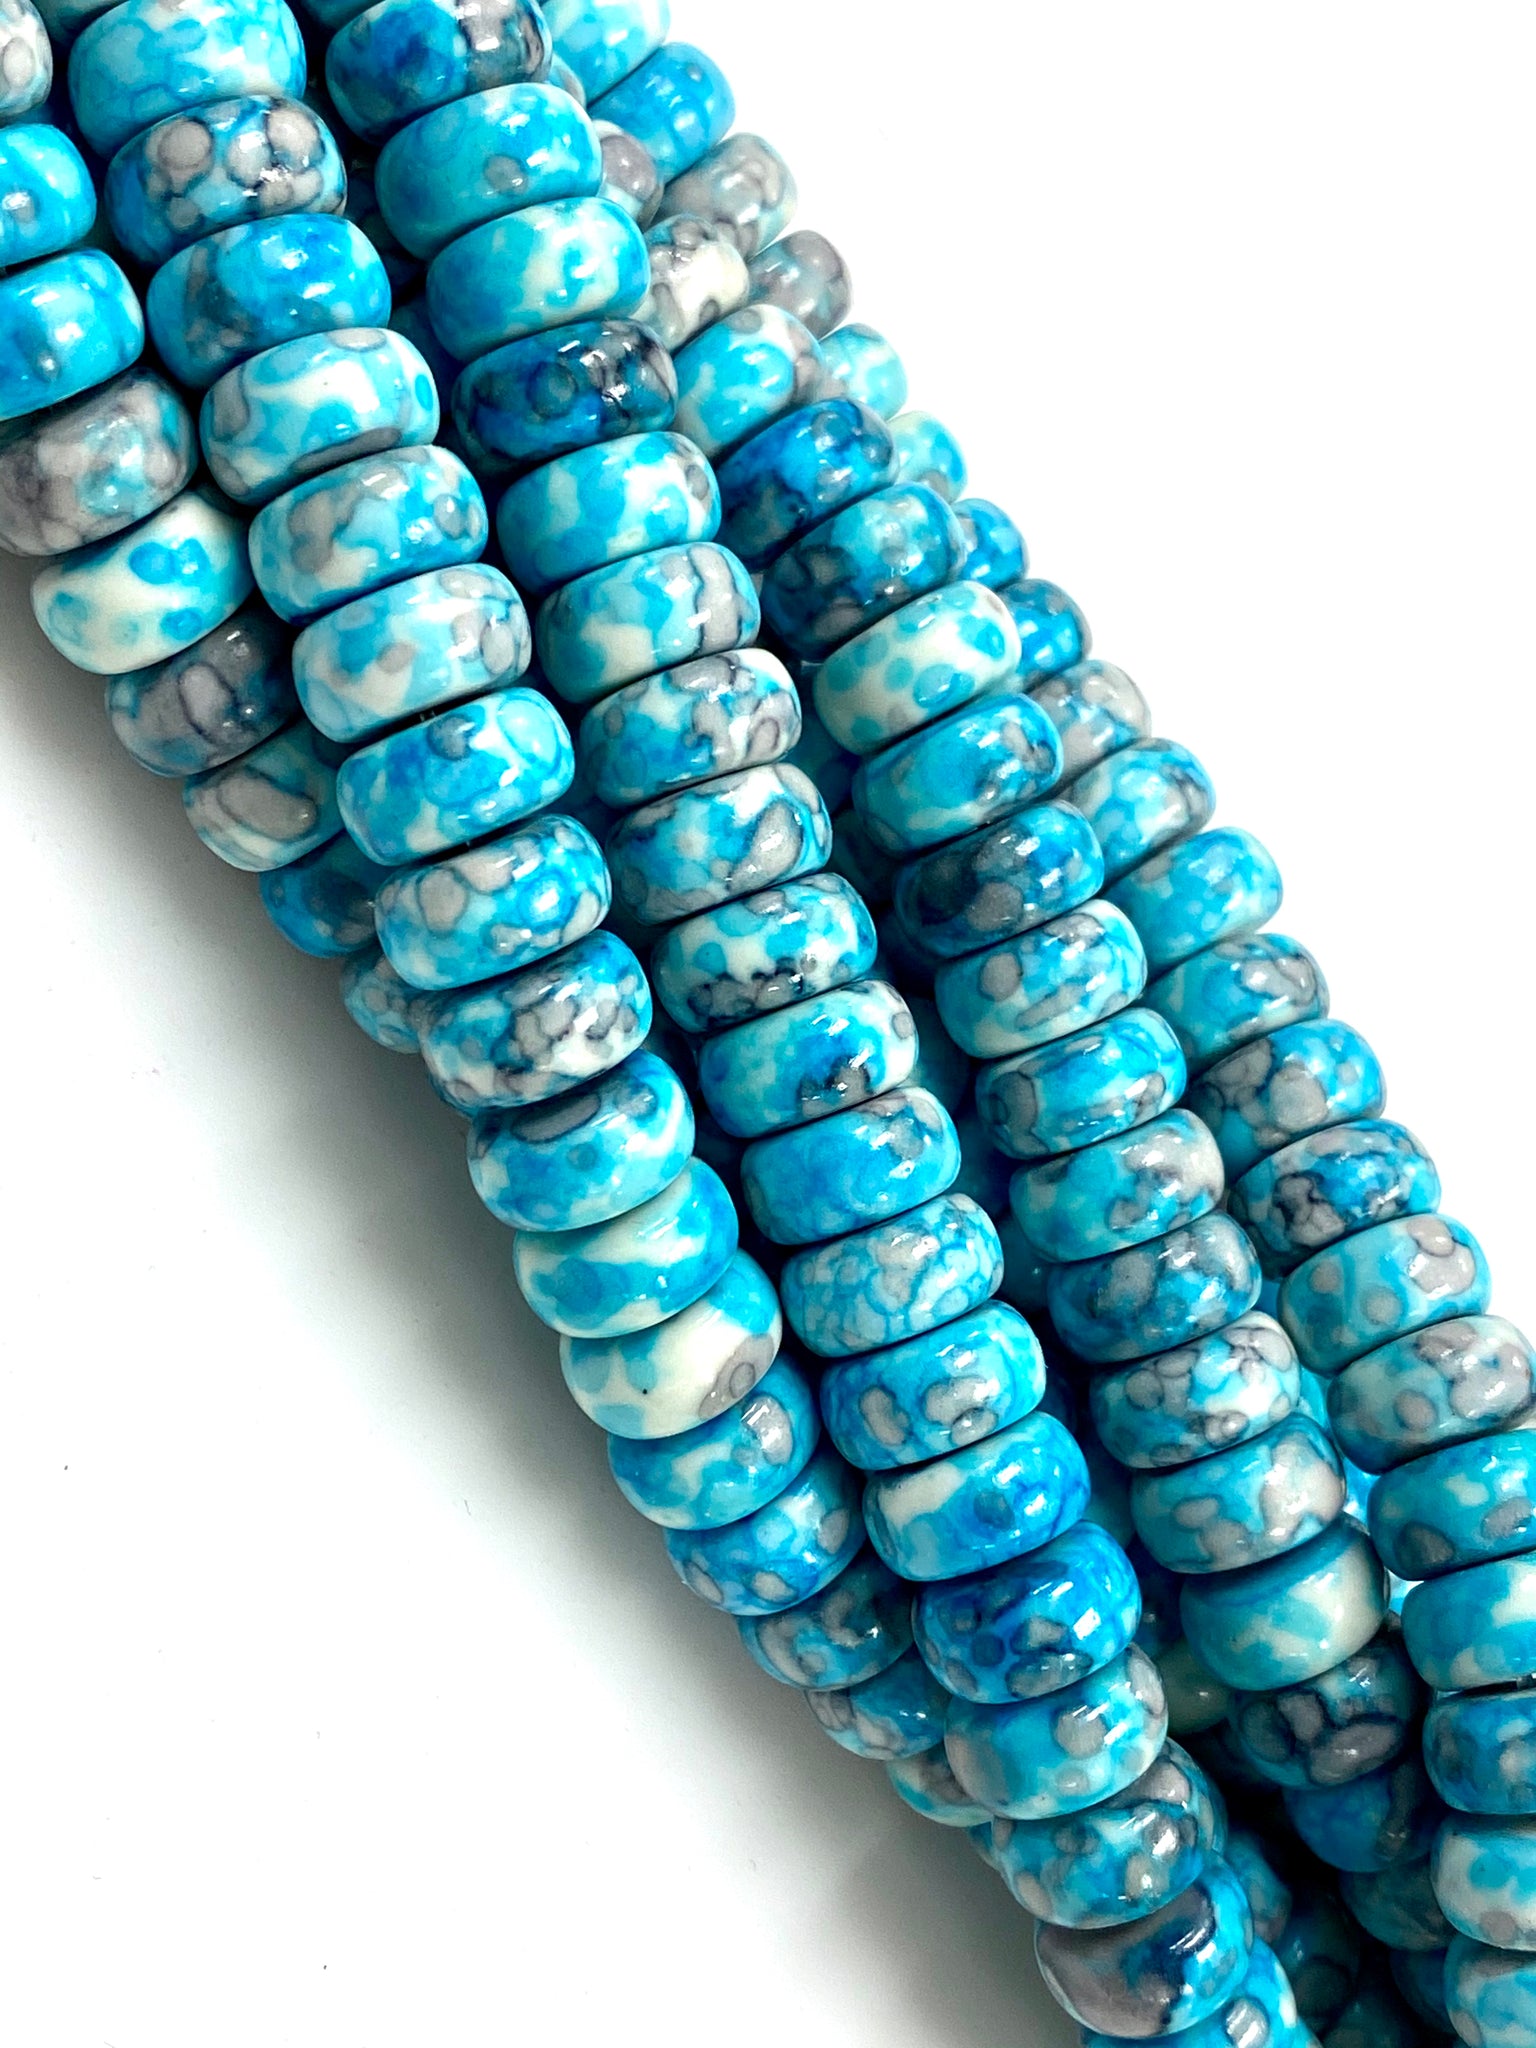 Natural Blue Rain Jasper Gemstone Beads / Rondelle Shape Beads / Healing Energy Stone Beads / 10mm 2 Strands Beads